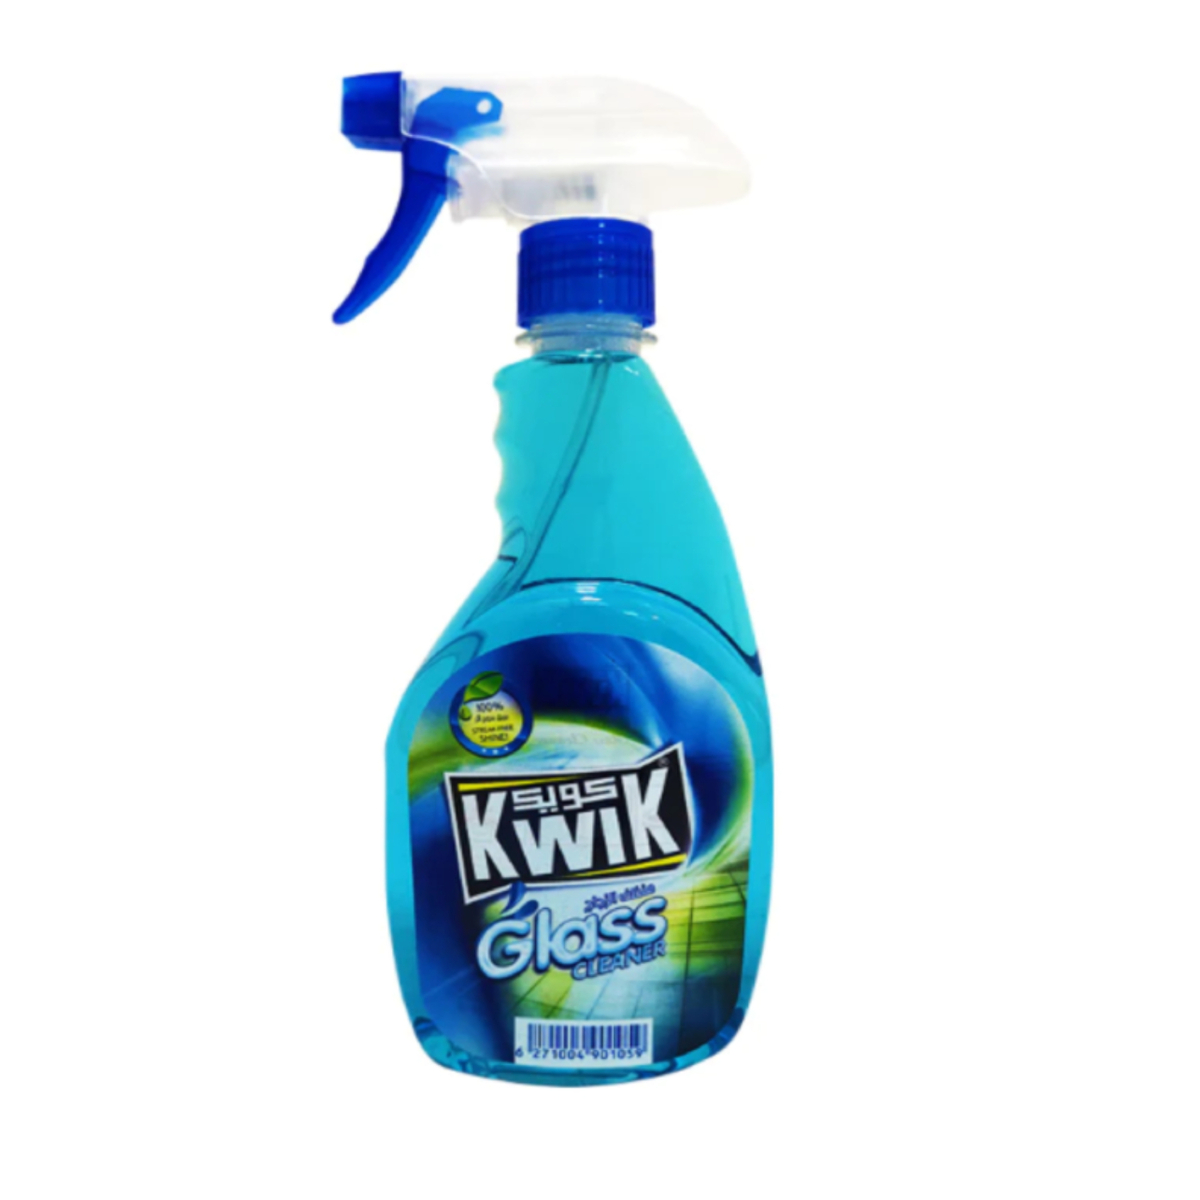 Kwik Glass Cleaner Value Pack 2 x 500 ml